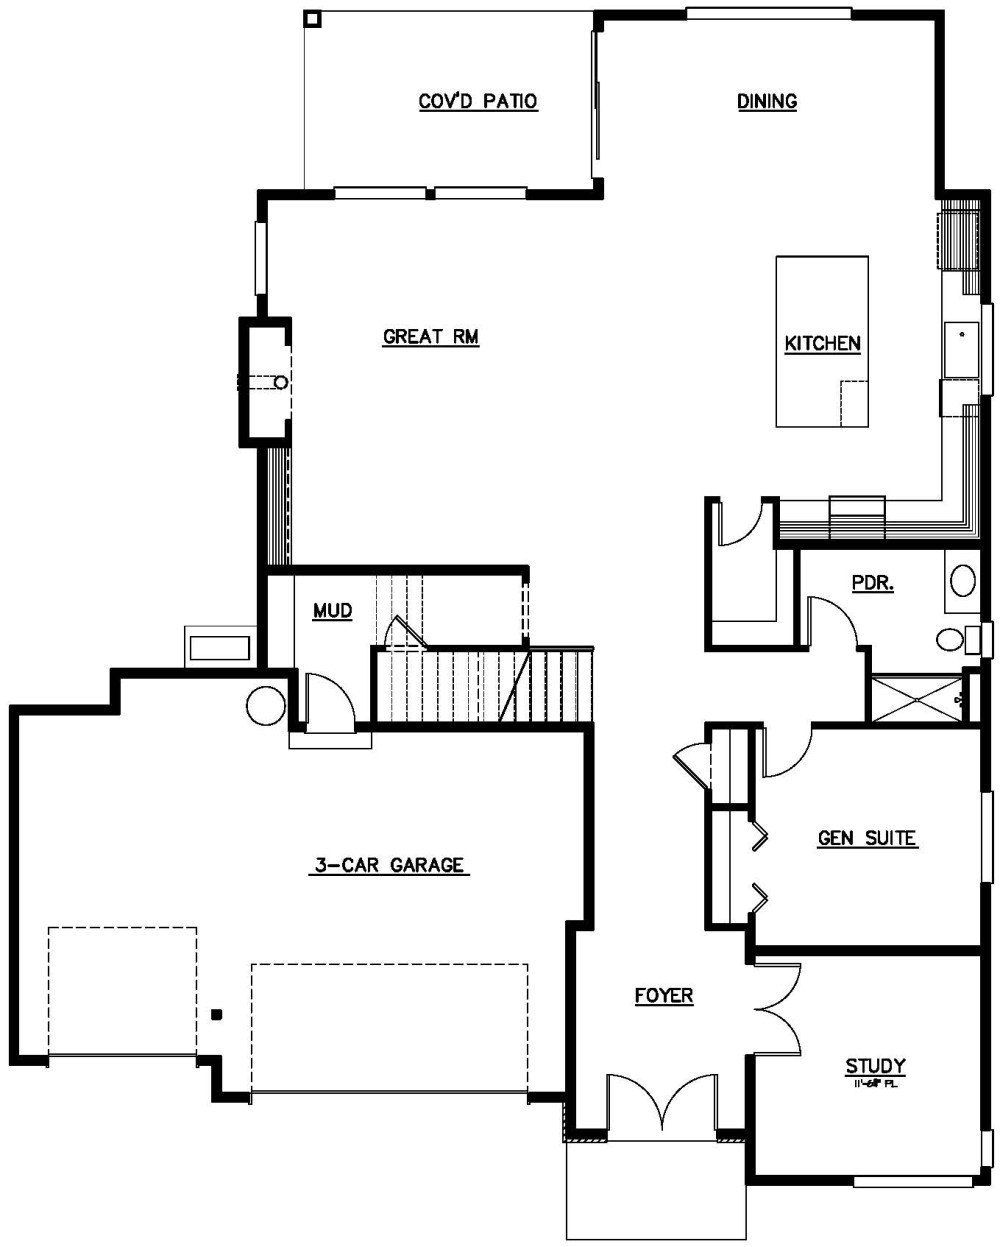 Main Floor Plan floorplan for the Carrington - Lot 2 home